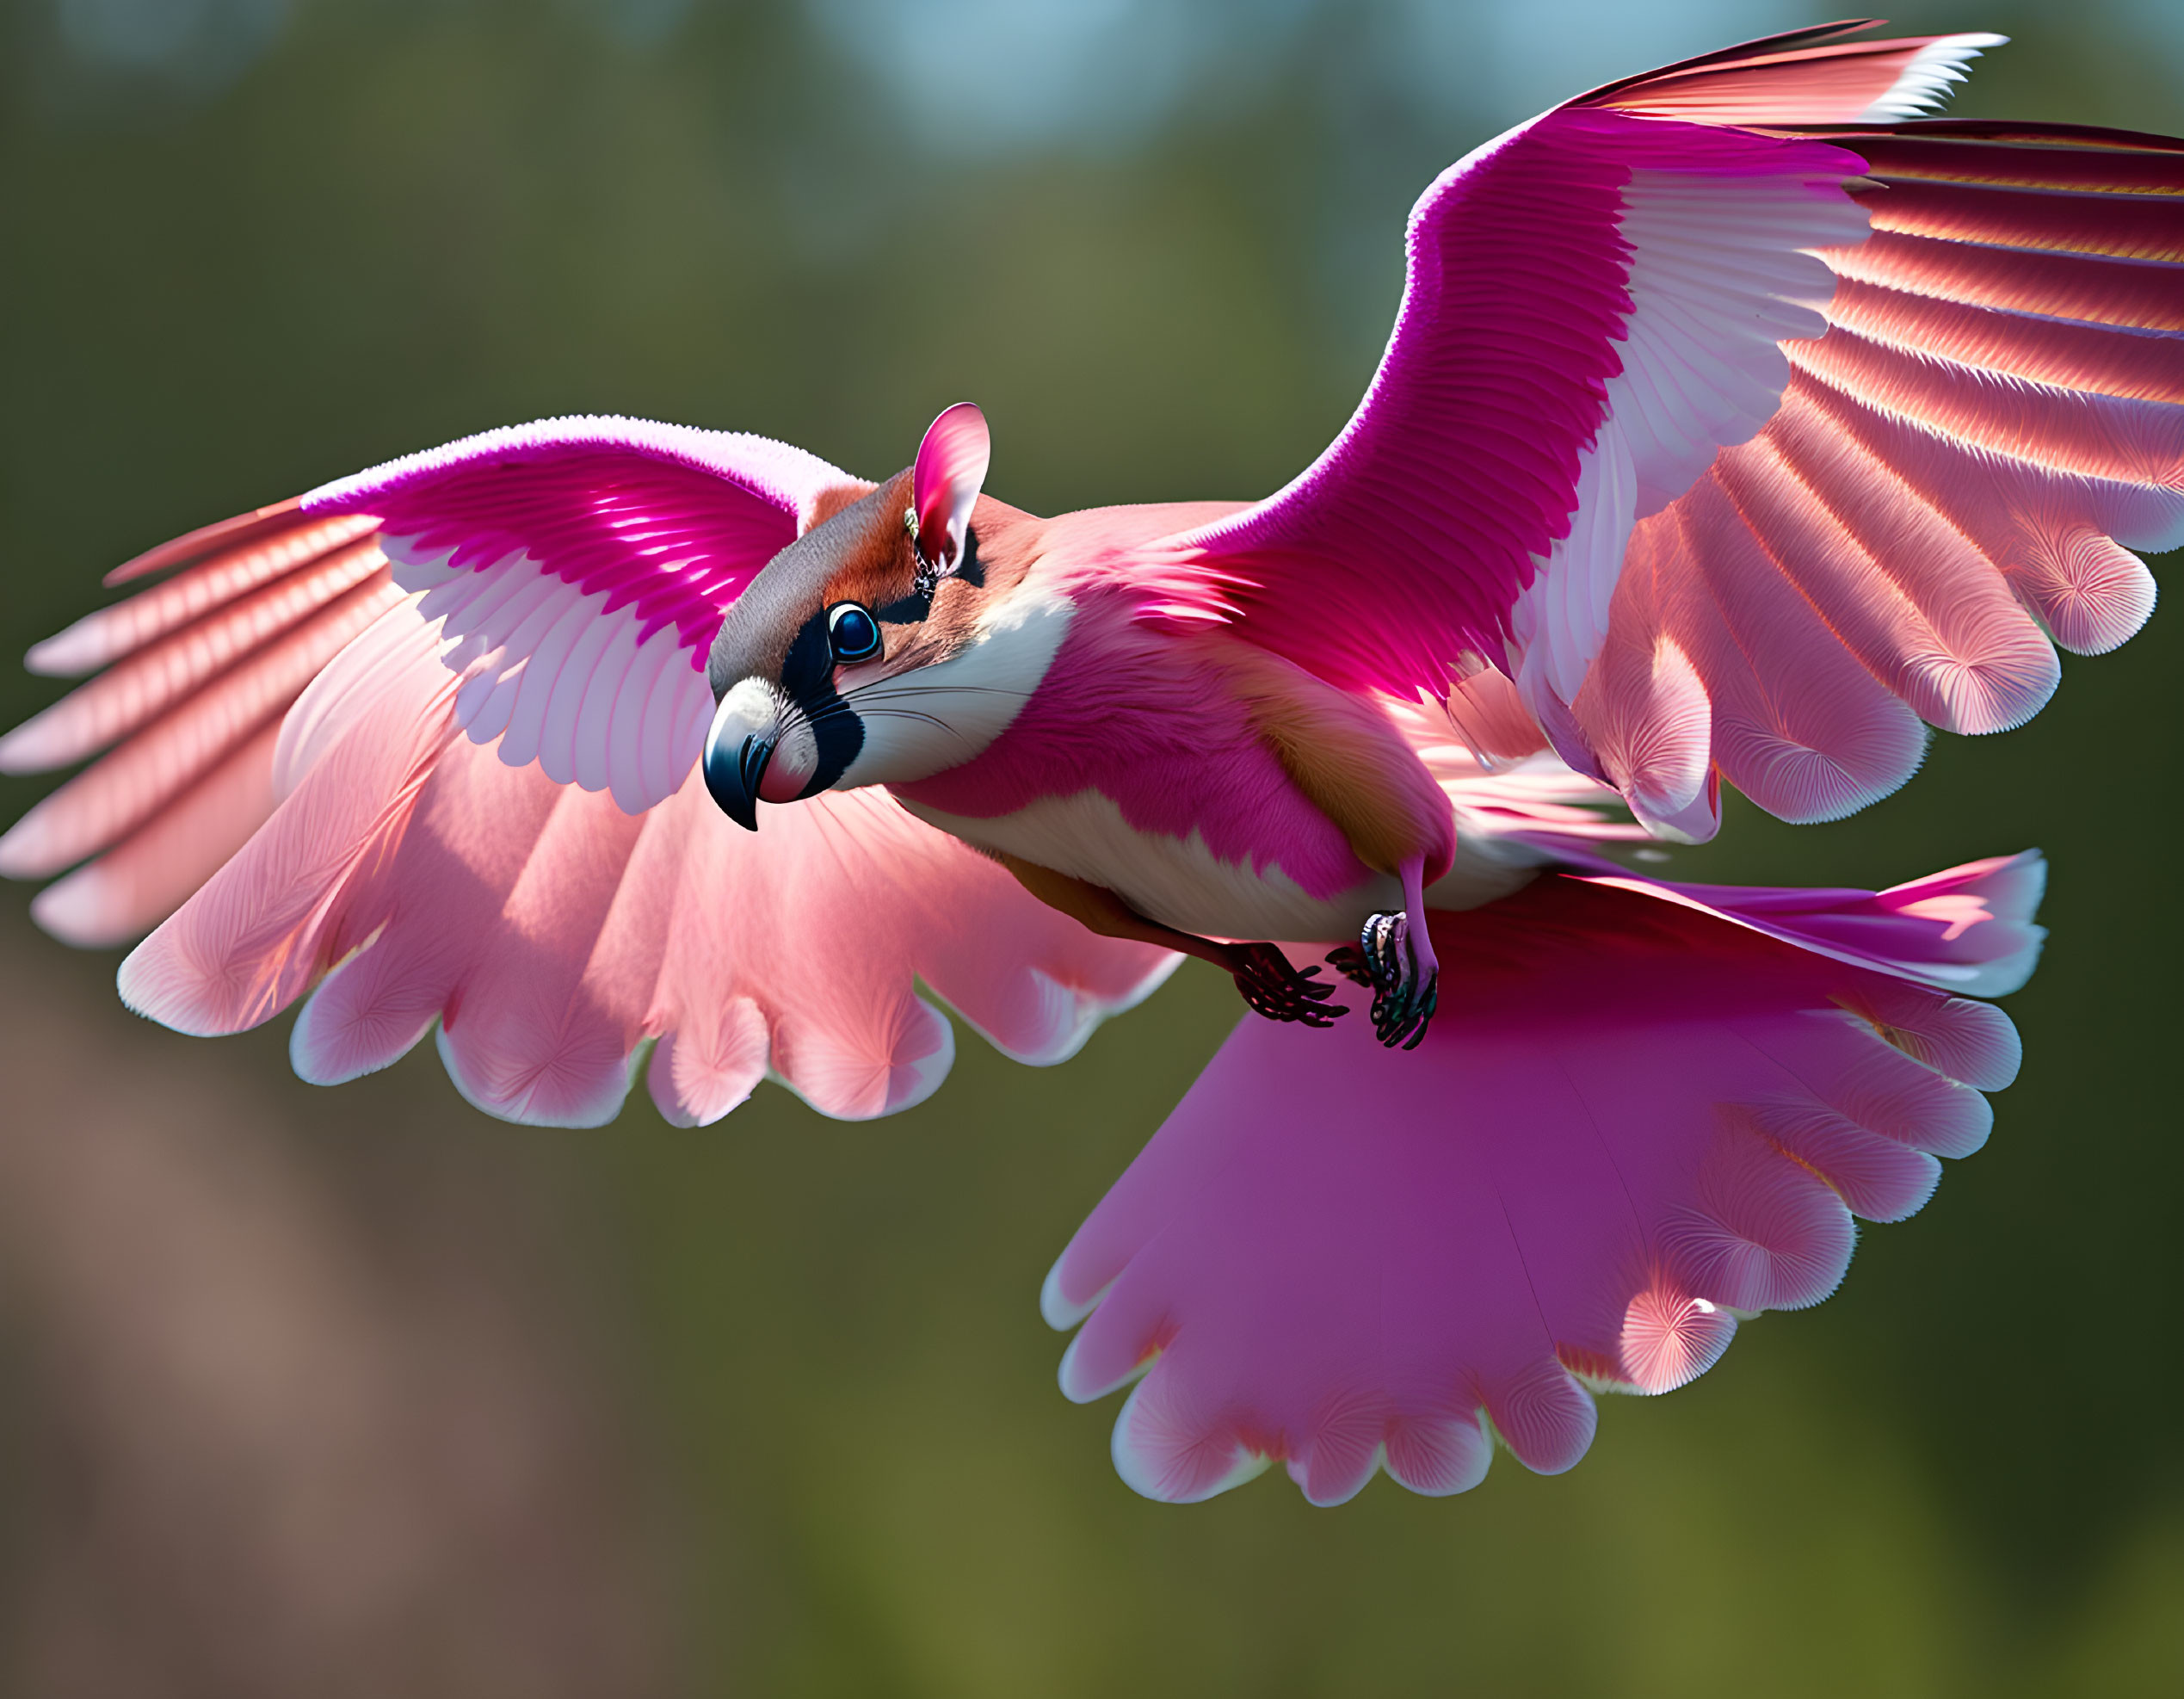 Vibrant pink-winged bird in flight against green backdrop